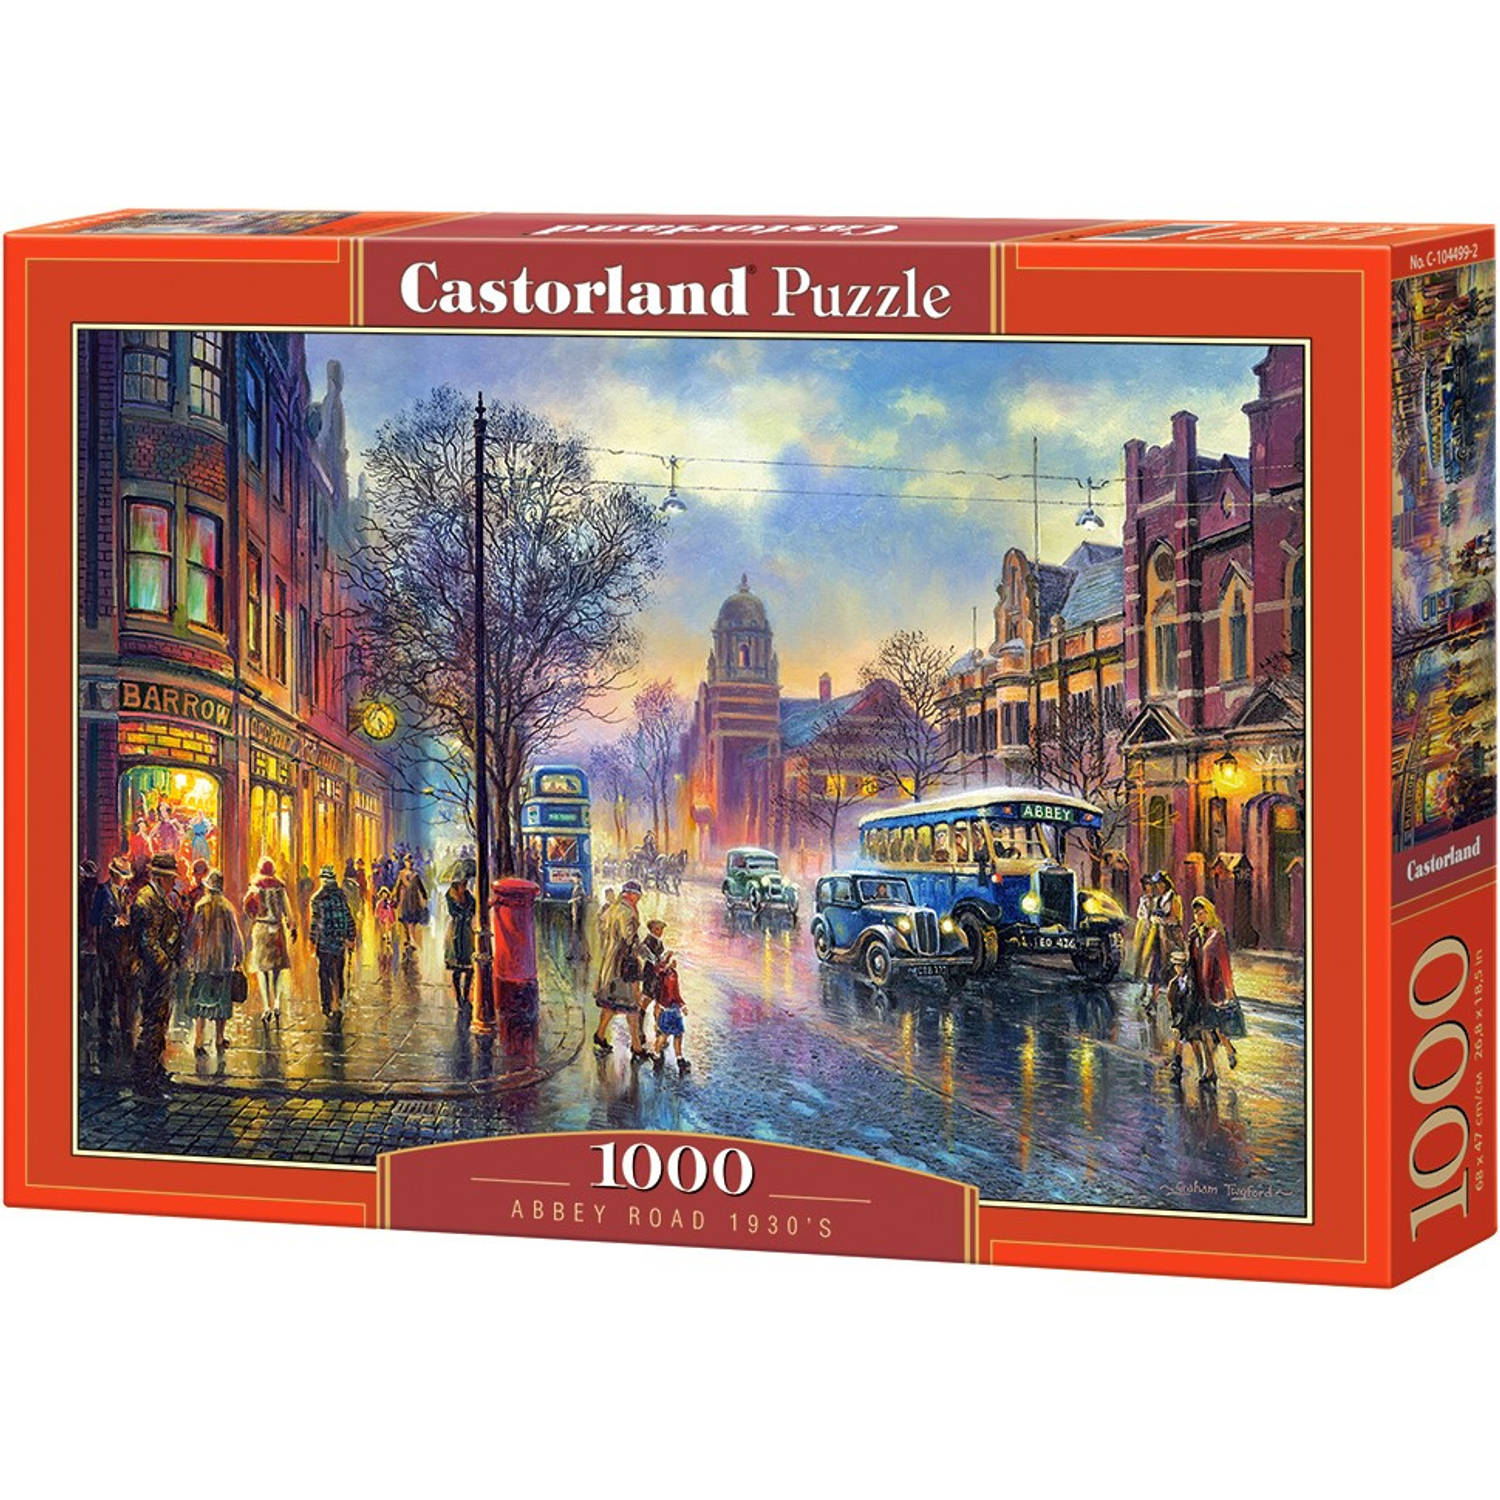 Castorland puzzel Abbey Road 35 x 25 cm karton 1000 stukjes